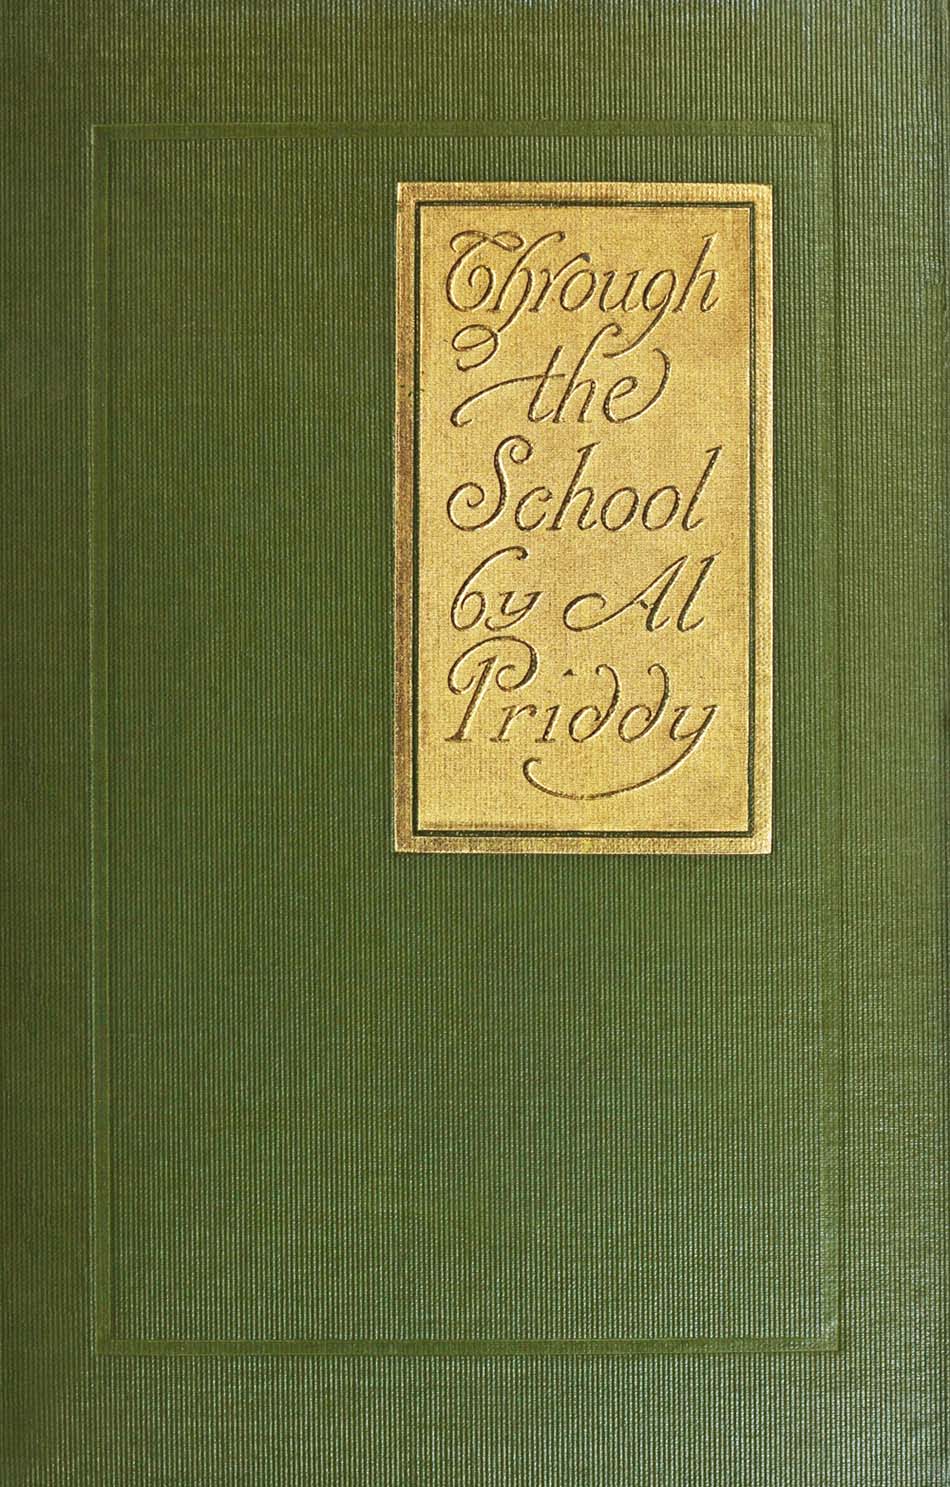 Al by Gutenberg Project Through Priddy—A eBook the School,